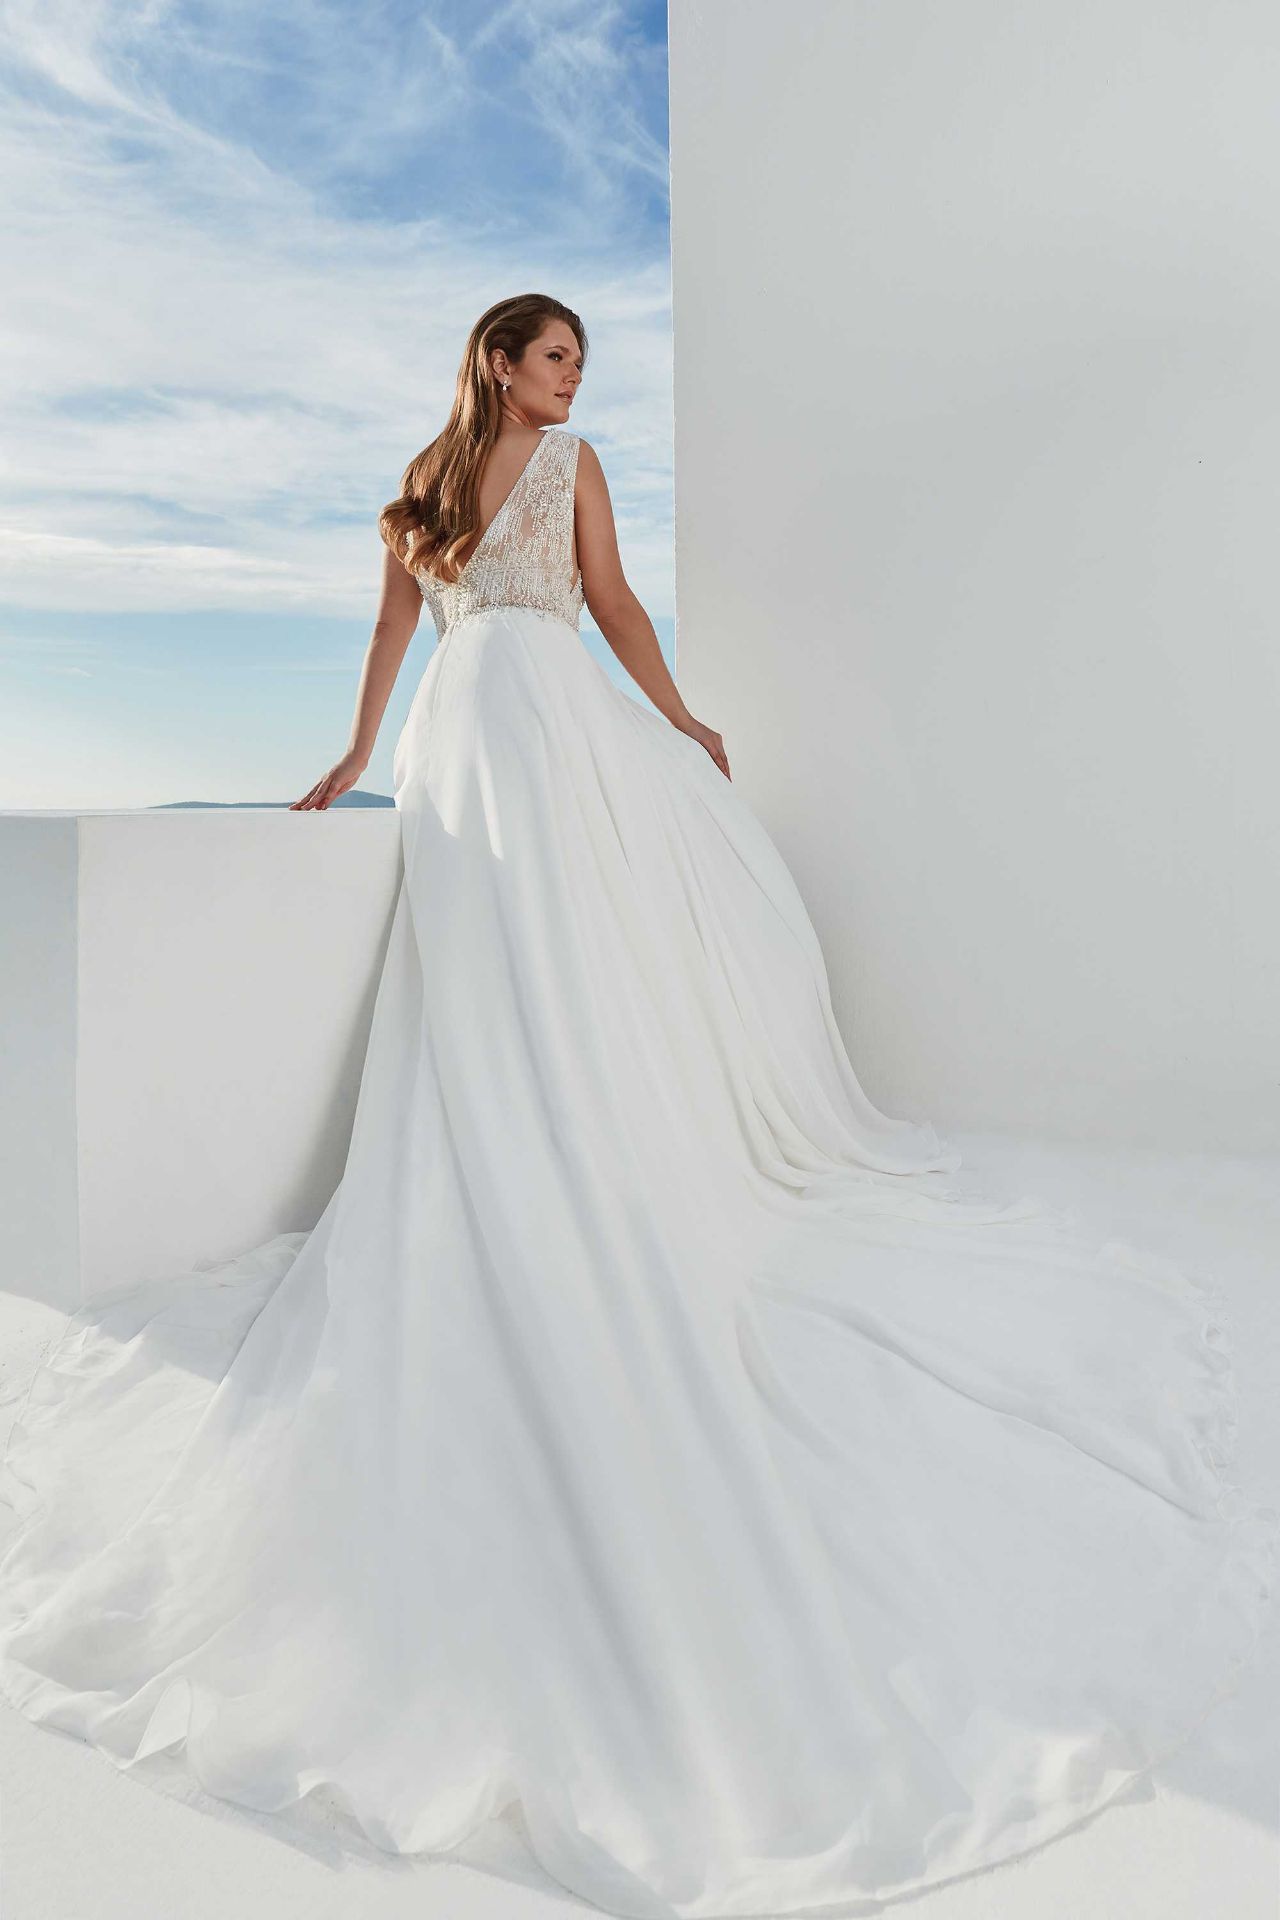 1 x Justin Alexander Designer Wedding Dress With Sheer Beaded Bodice - UK Size 10 - RRP £1,390 - Image 11 of 11